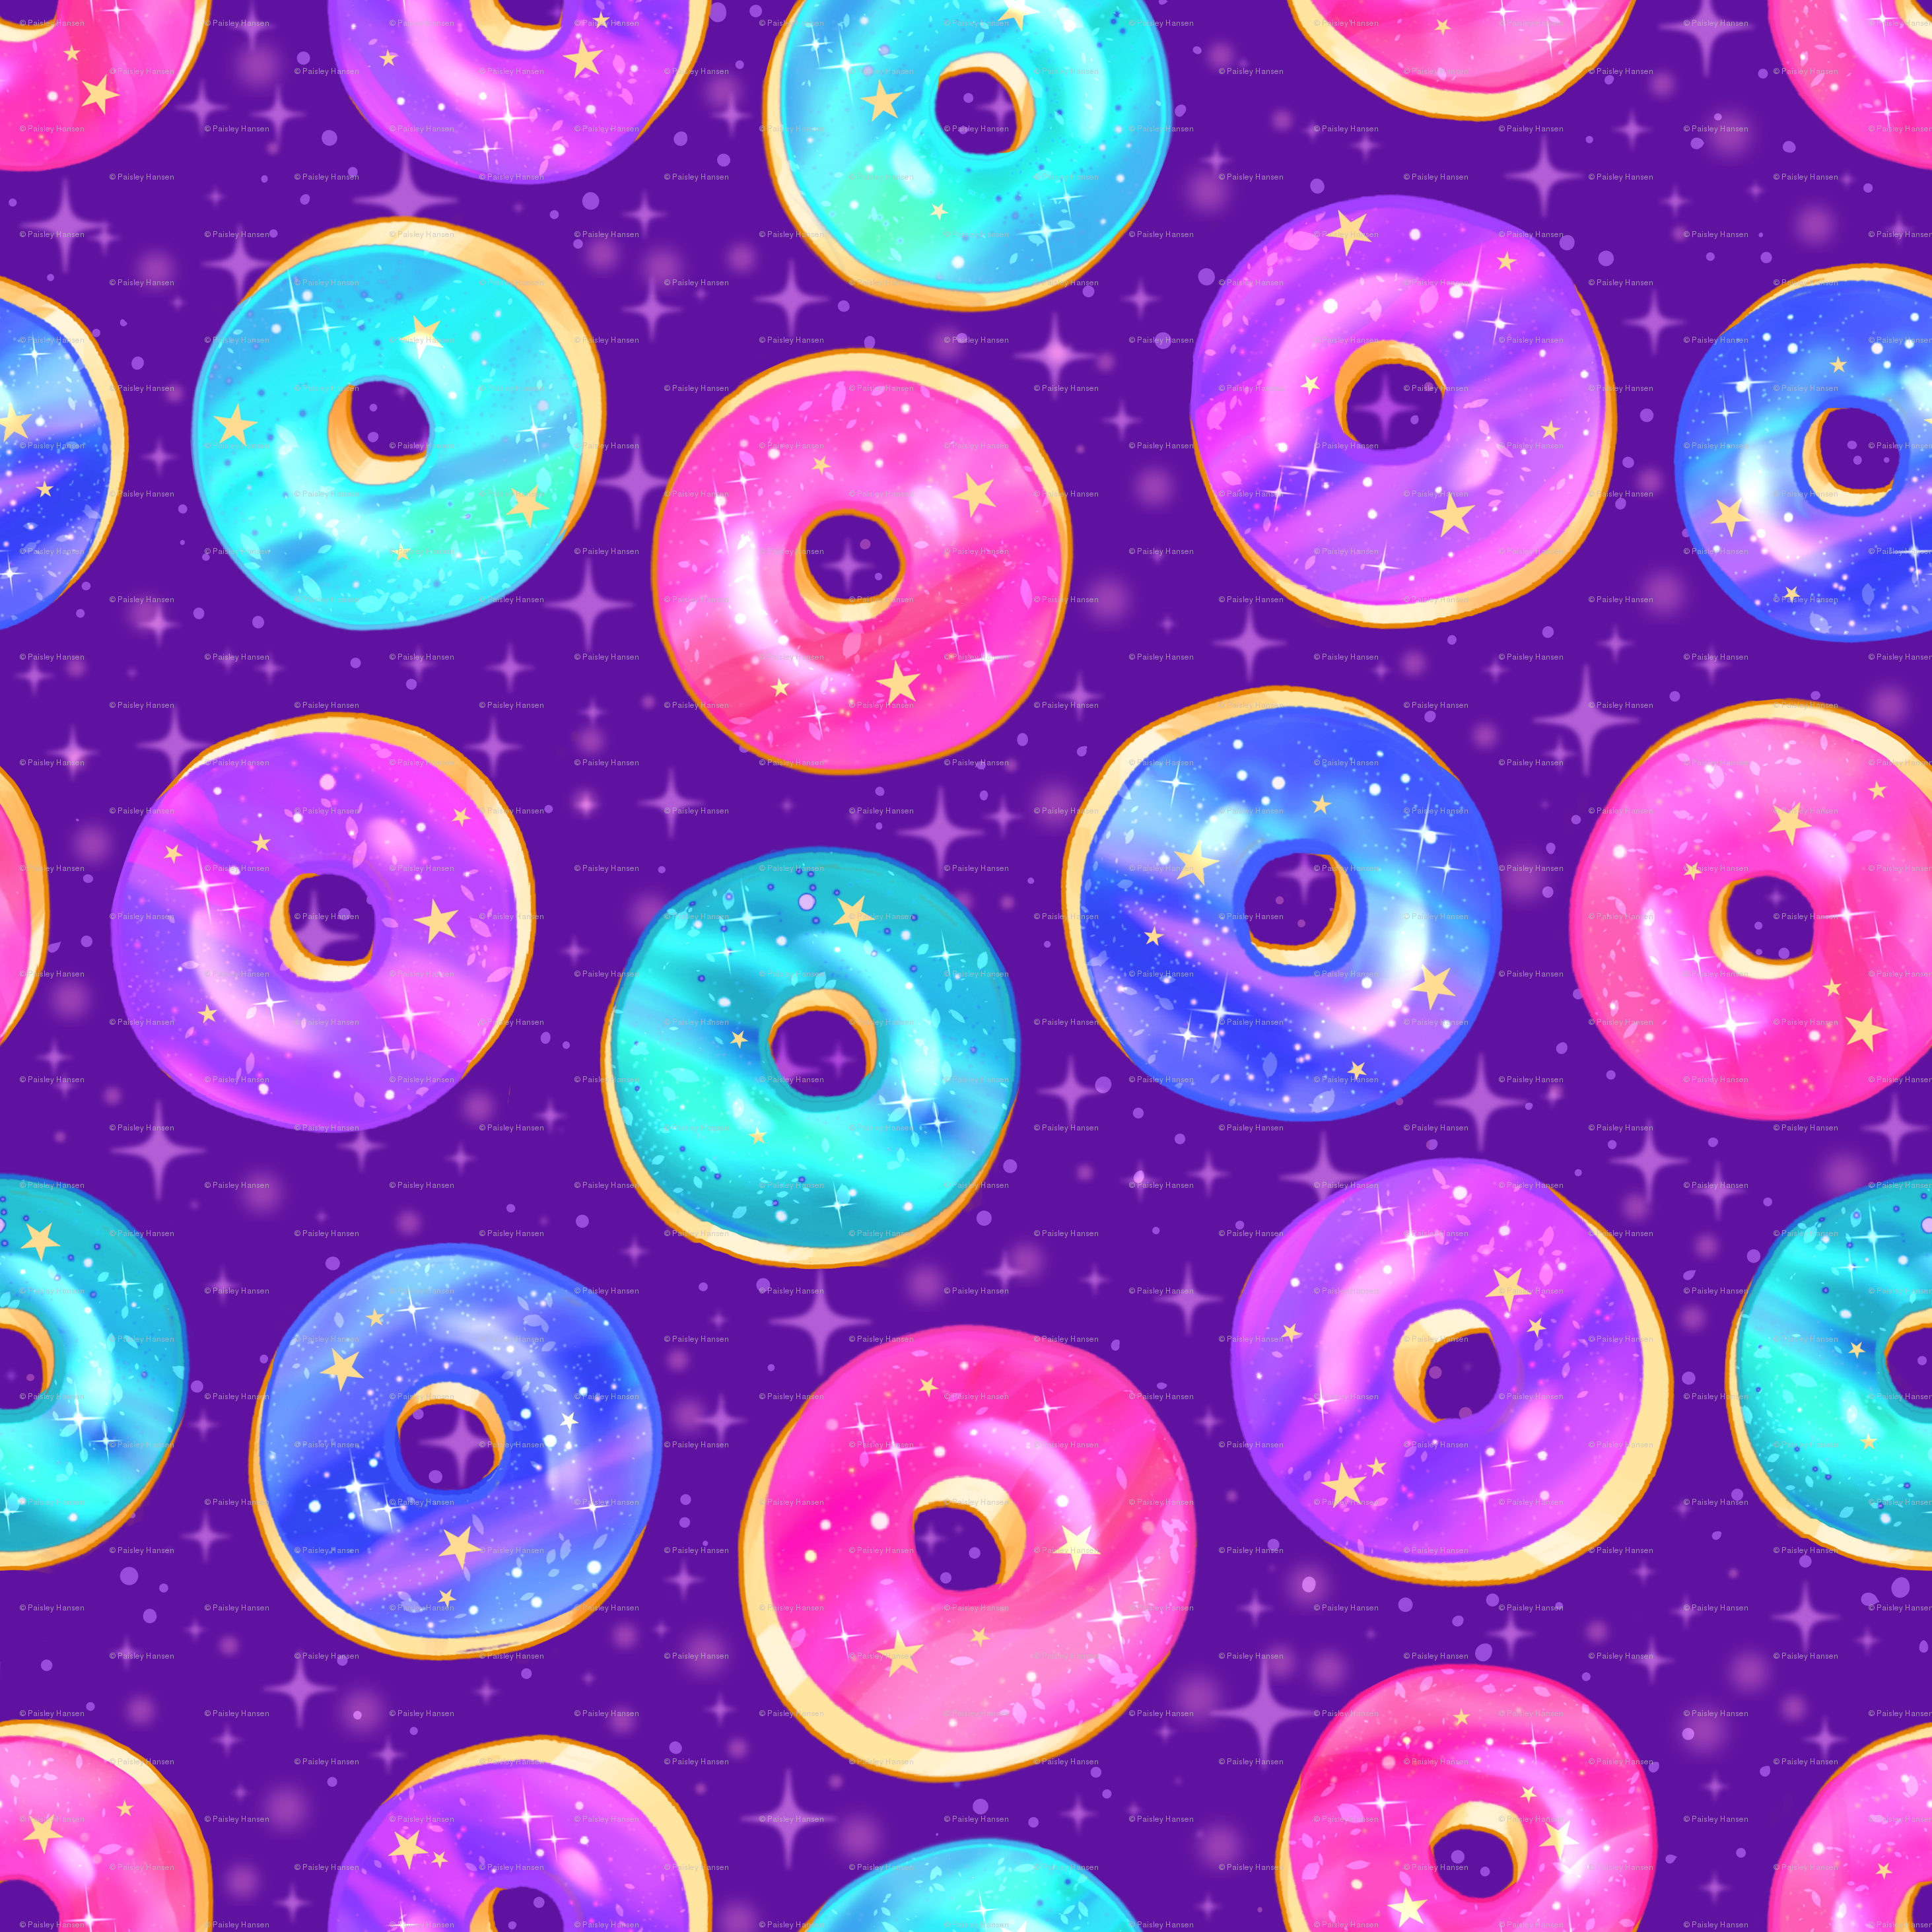 Galaxy Donut Wallpaper Free Galaxy Donut Background